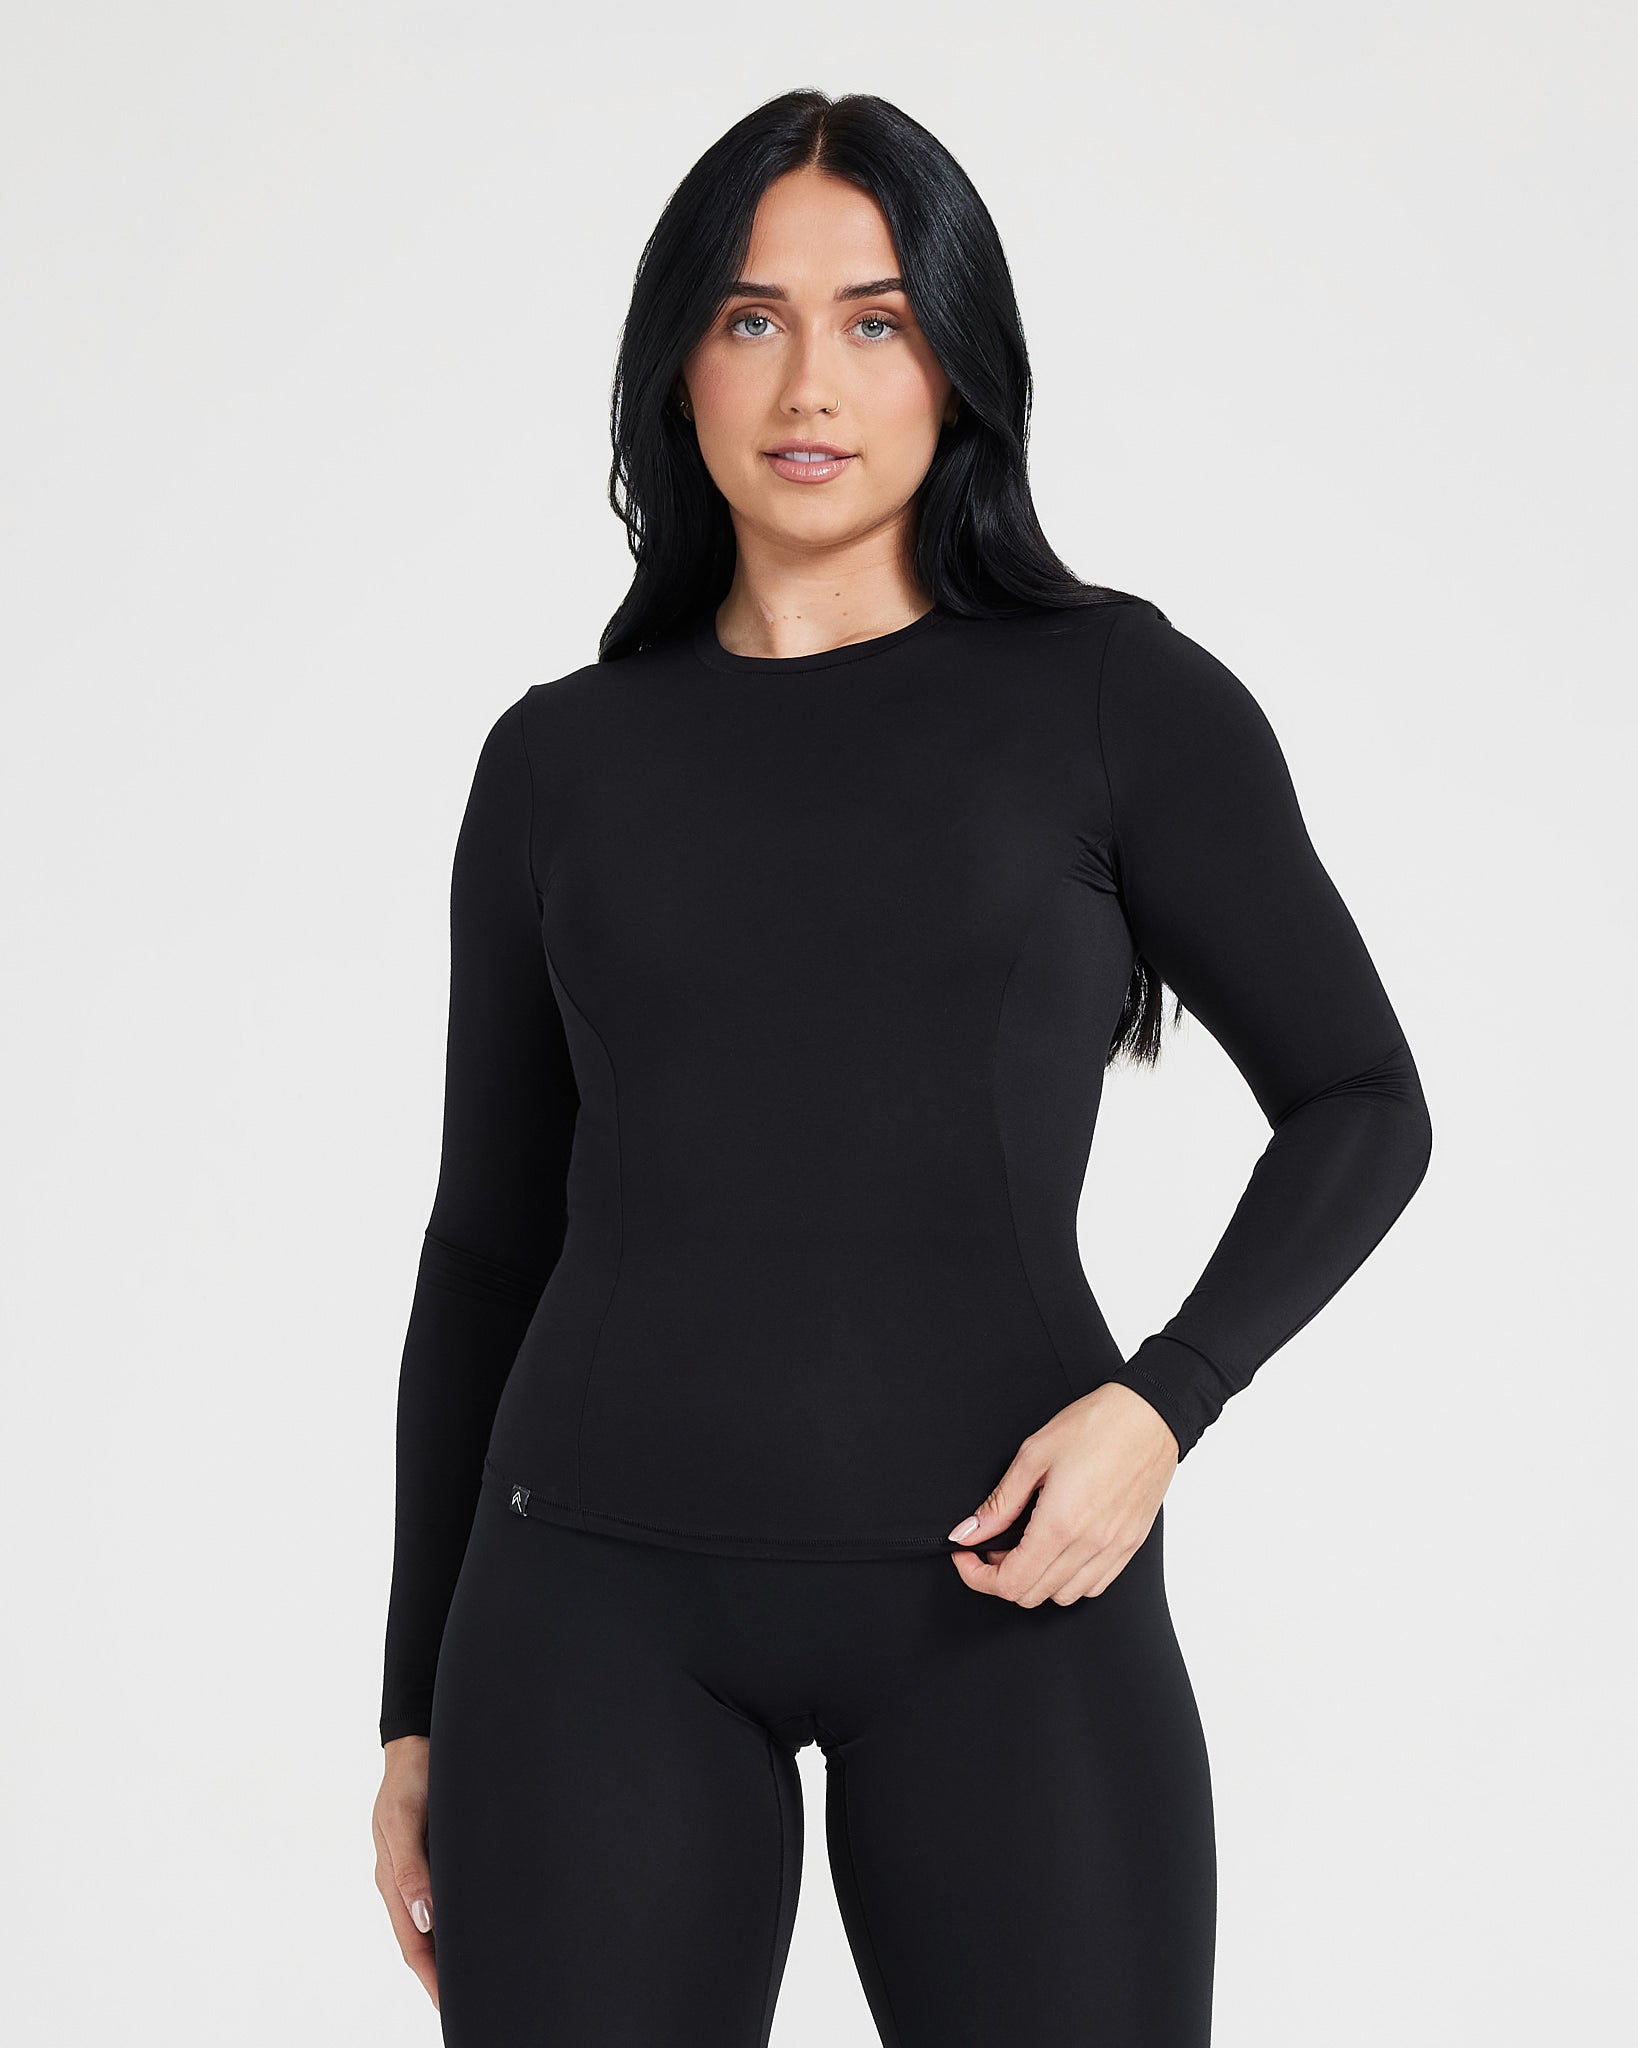 Women's Black Long Sleeve Top - Slim Fit | Oner Active UK